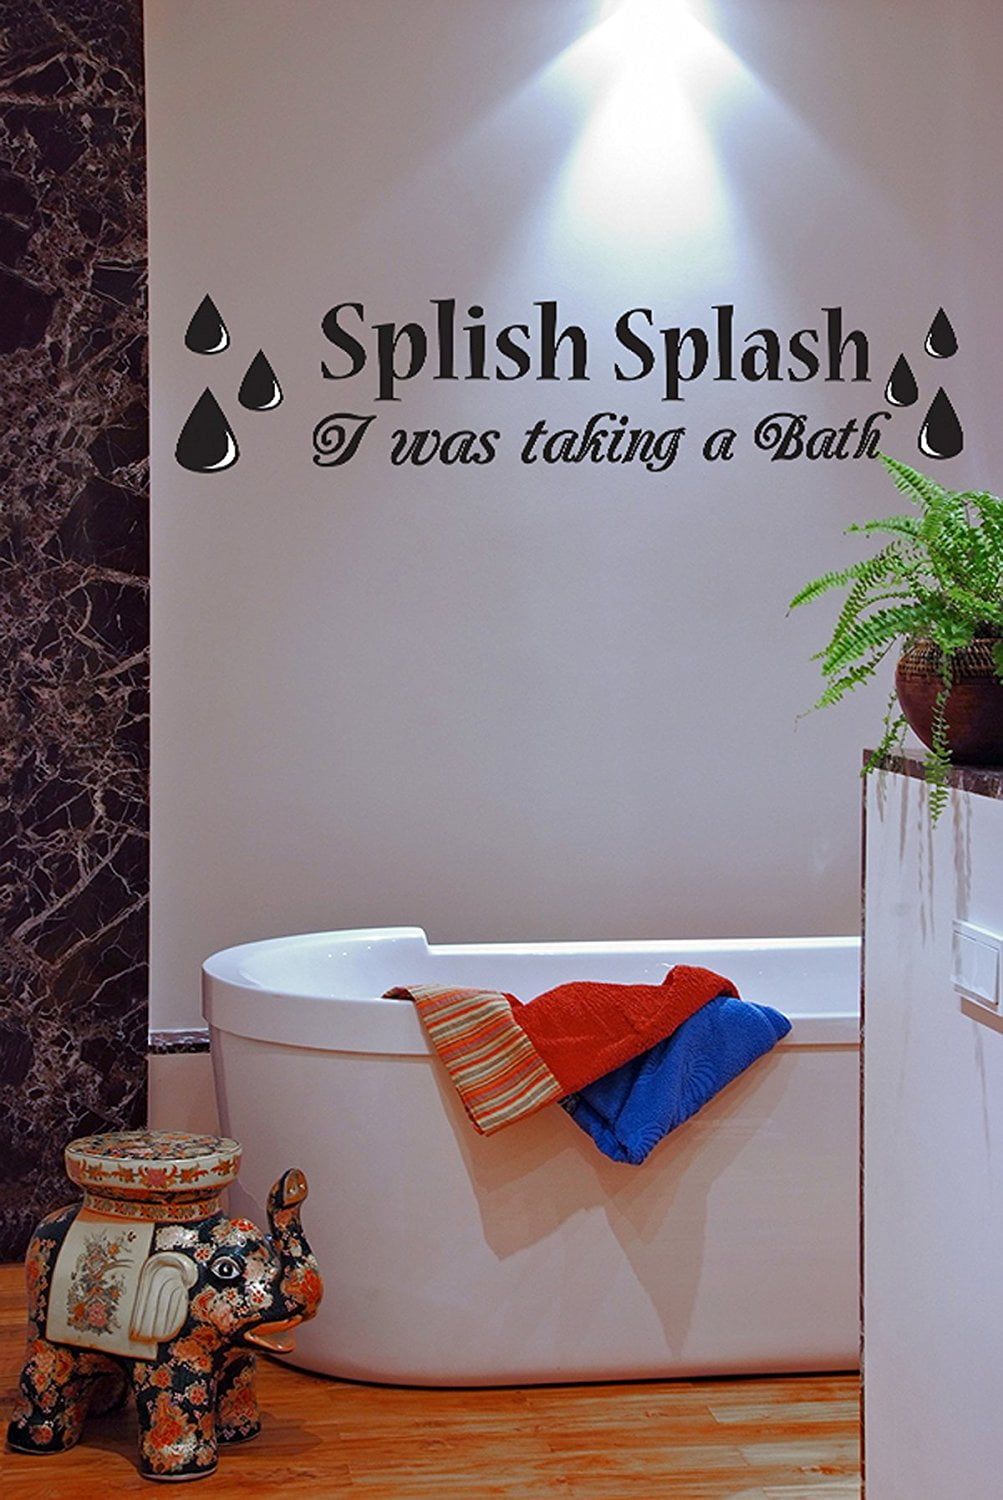 Splish Splash I'm Taking A Bath removable vinyl wall decal 